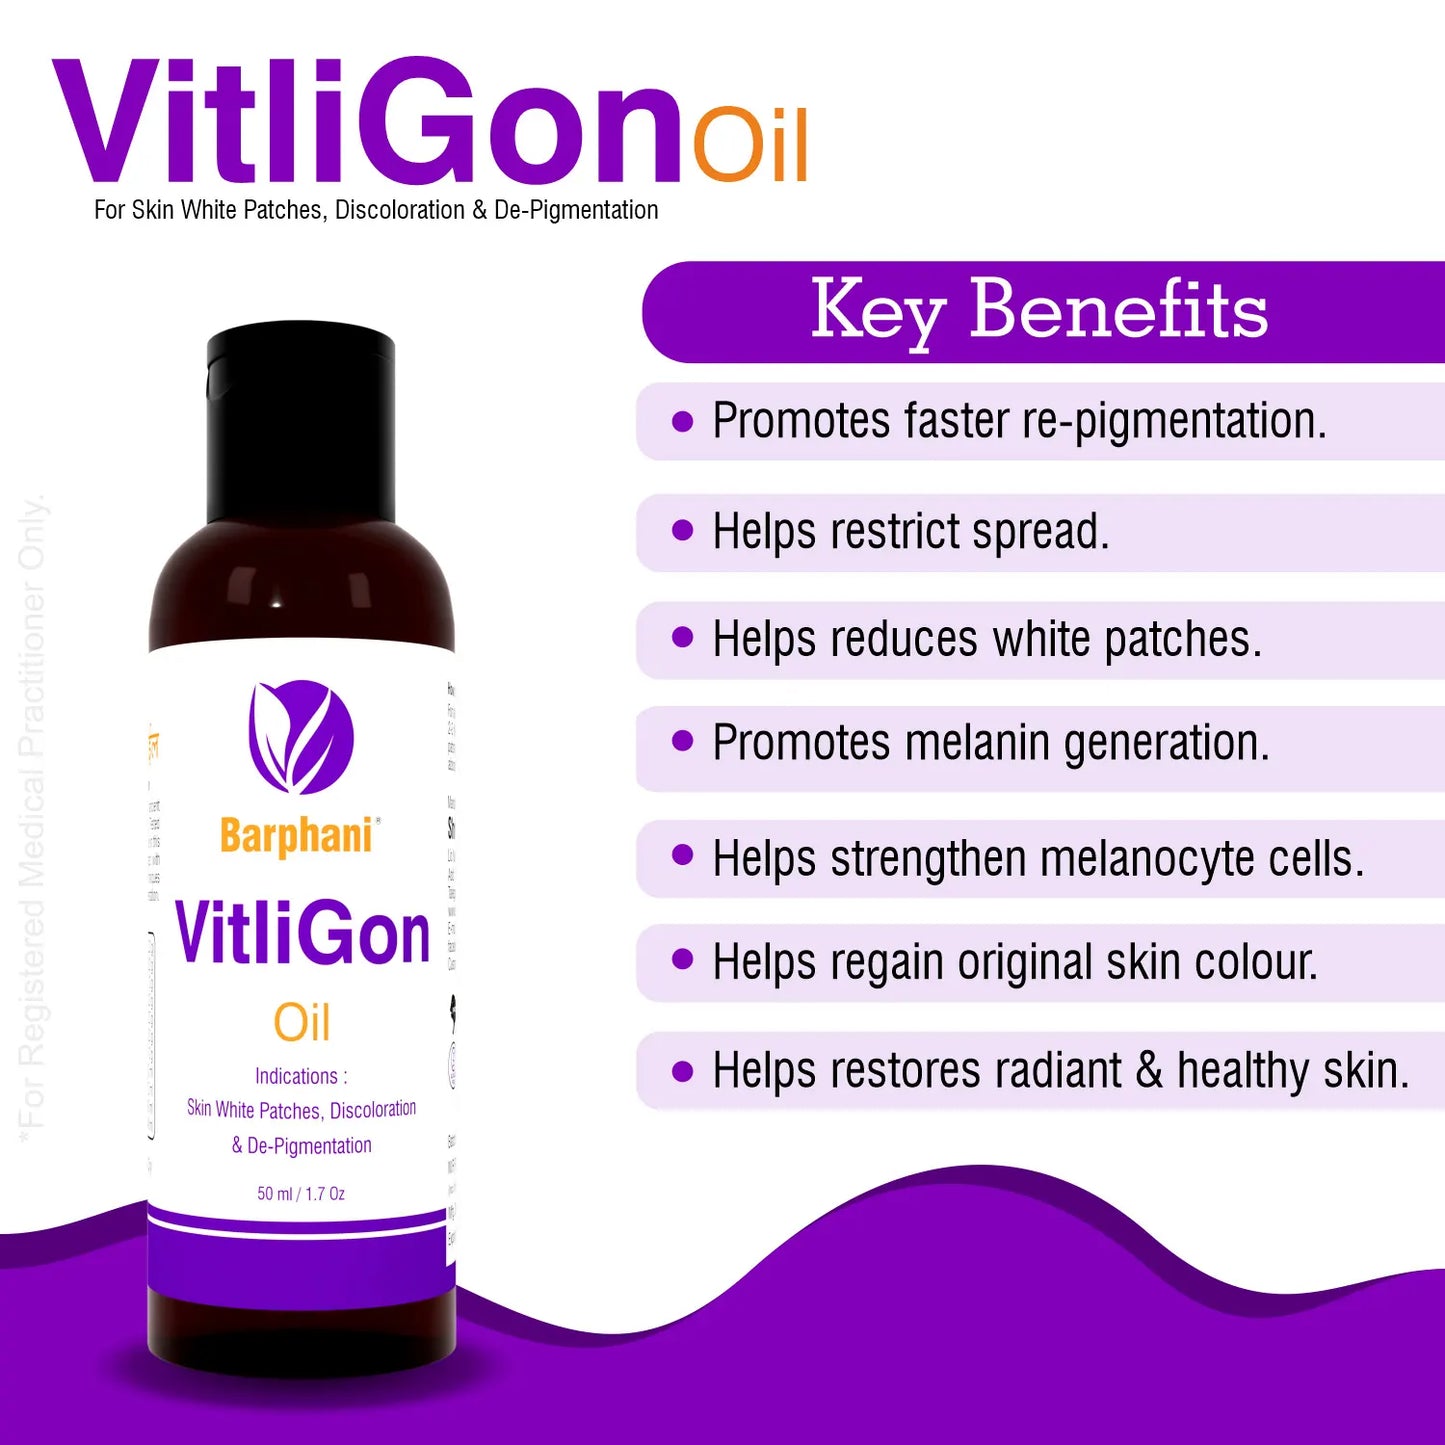 Barphani VitliGon Oil 200ml - Super Effective on Vitiligo White Patches, Discolouration, De-Pigmentation, Faster Results, Helps Restricts Spread